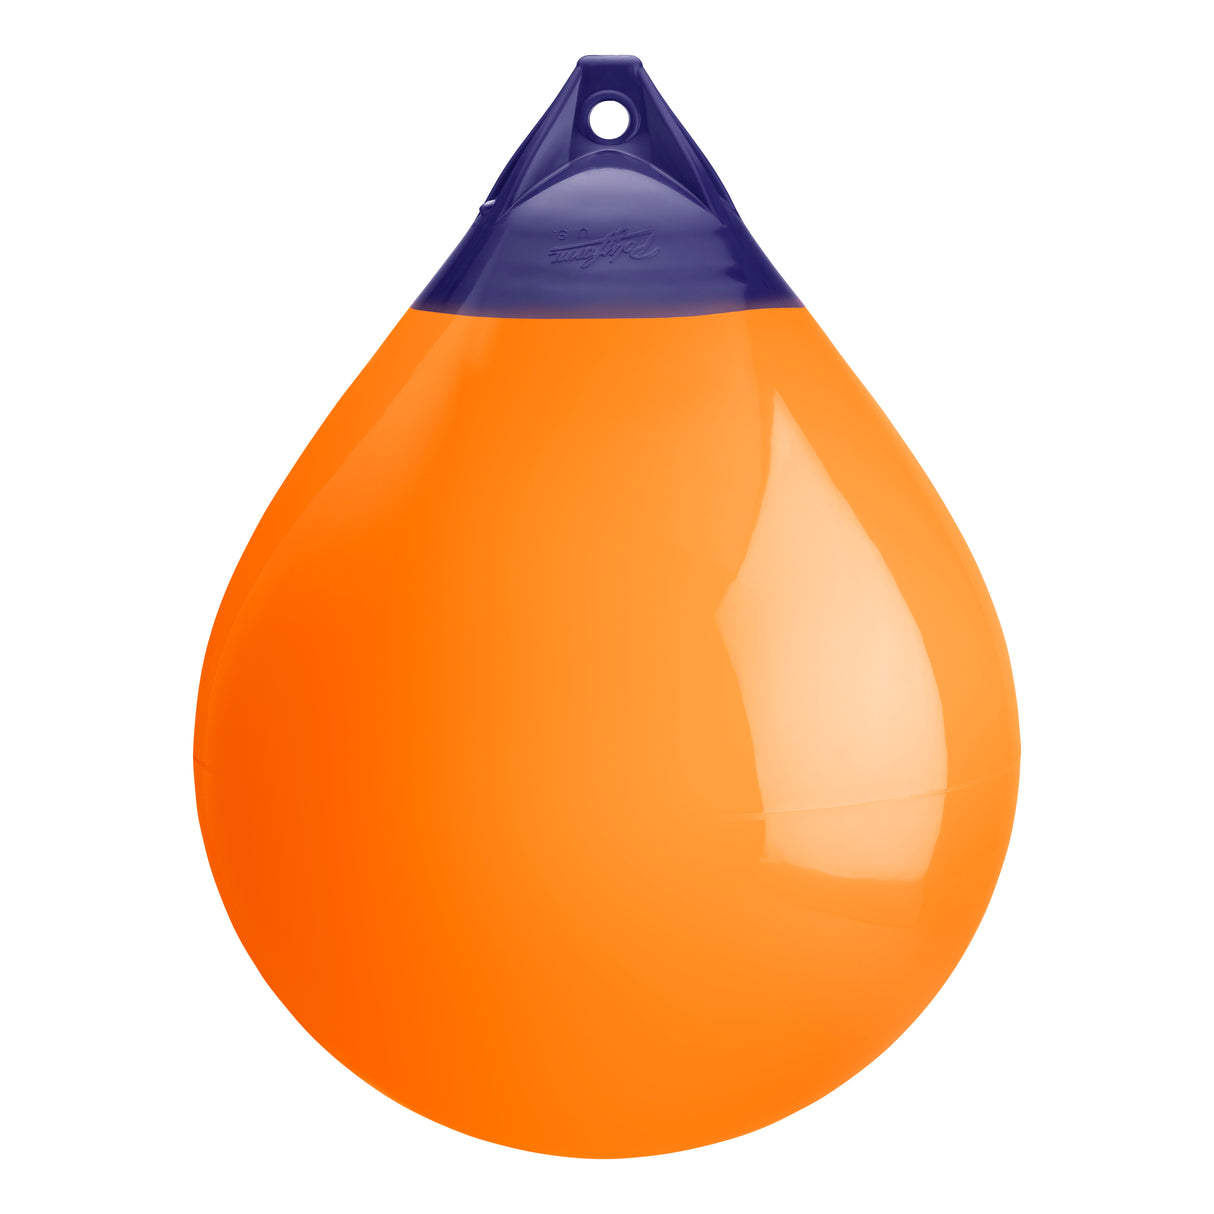 Orange inflatable buoy, Polyform A-6 